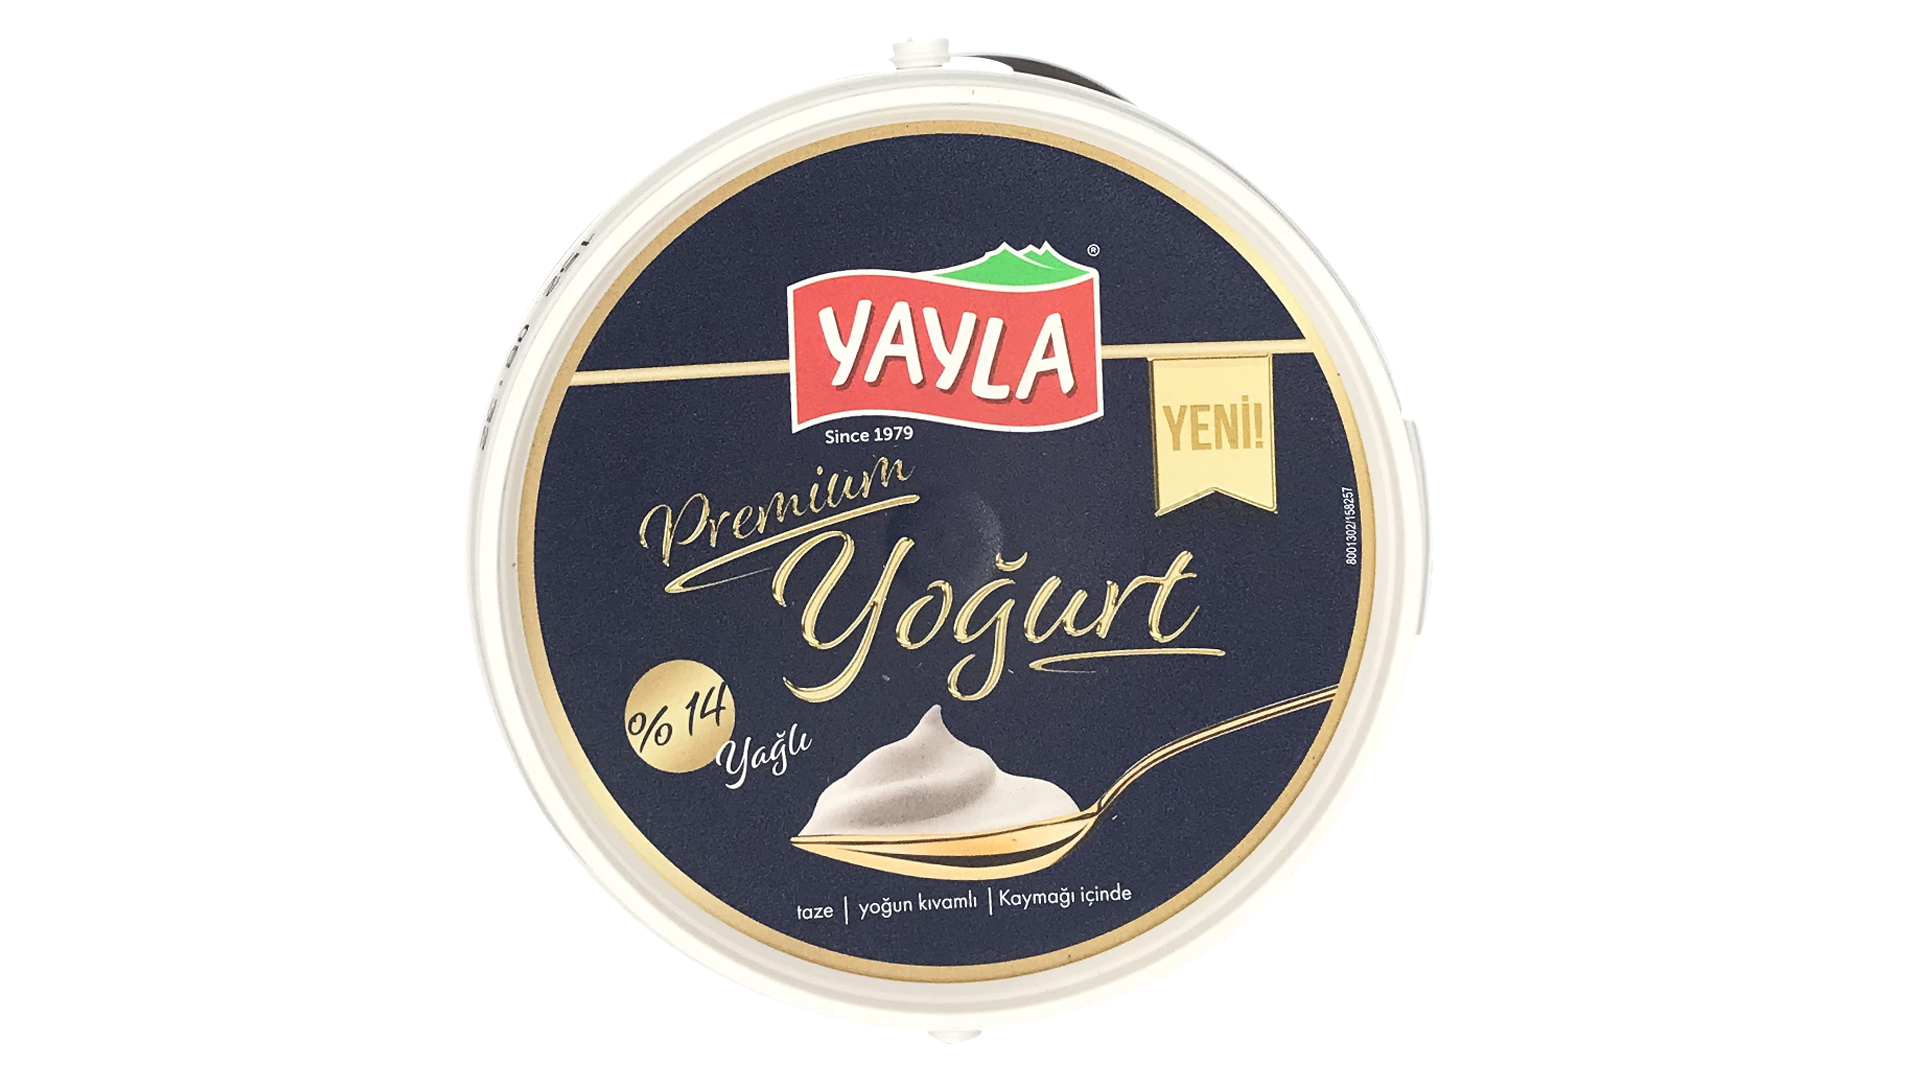 Yayla Premium Yoghurt 950g 2